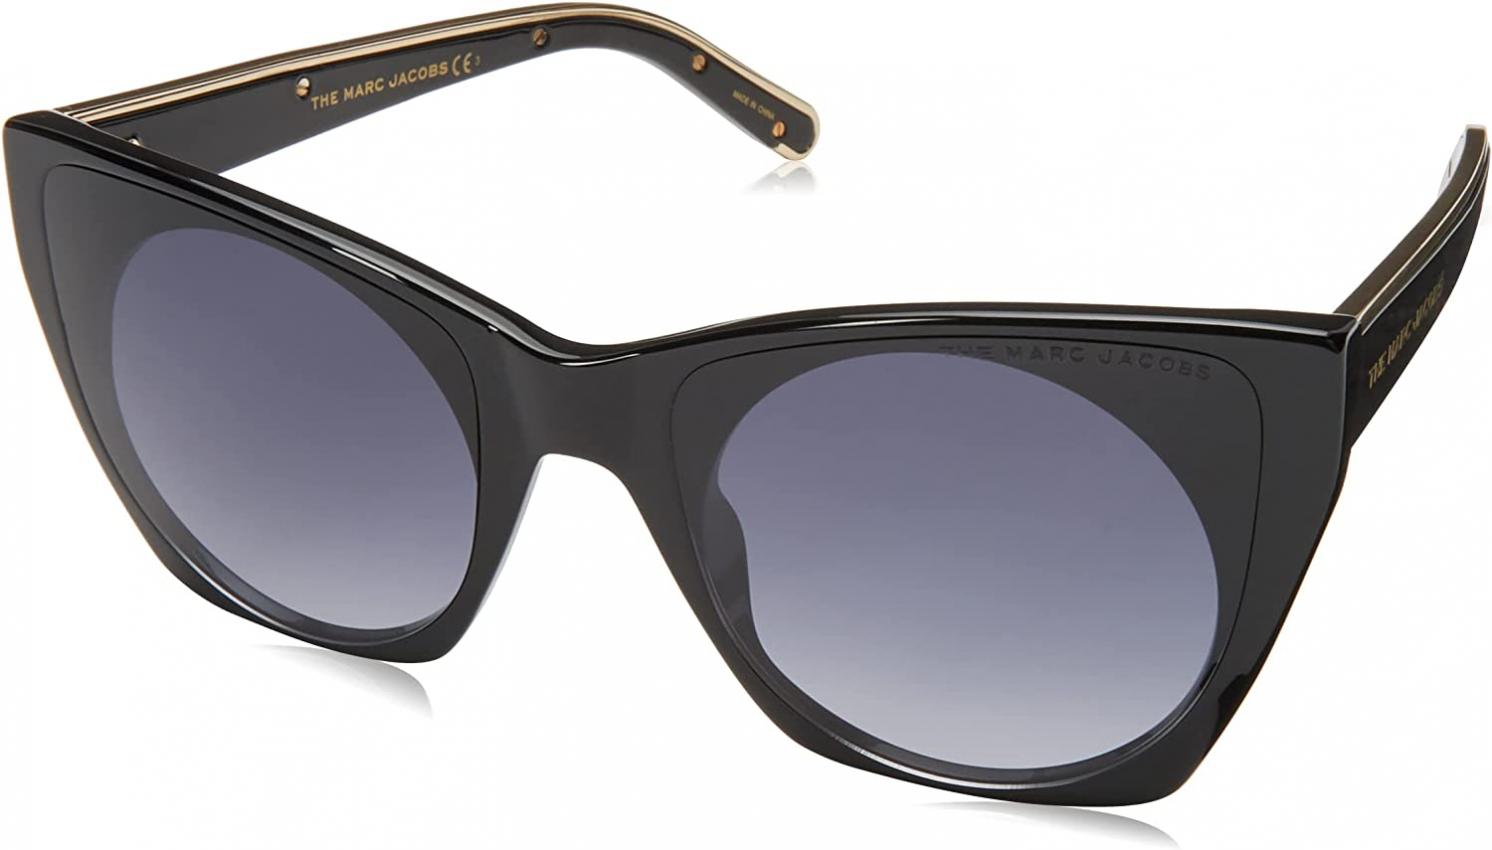 Marc Jacobs Women's Marc 450/G/S Cat Eye Sunglasses, Black/Gray Shaded, 55mm, 20mm